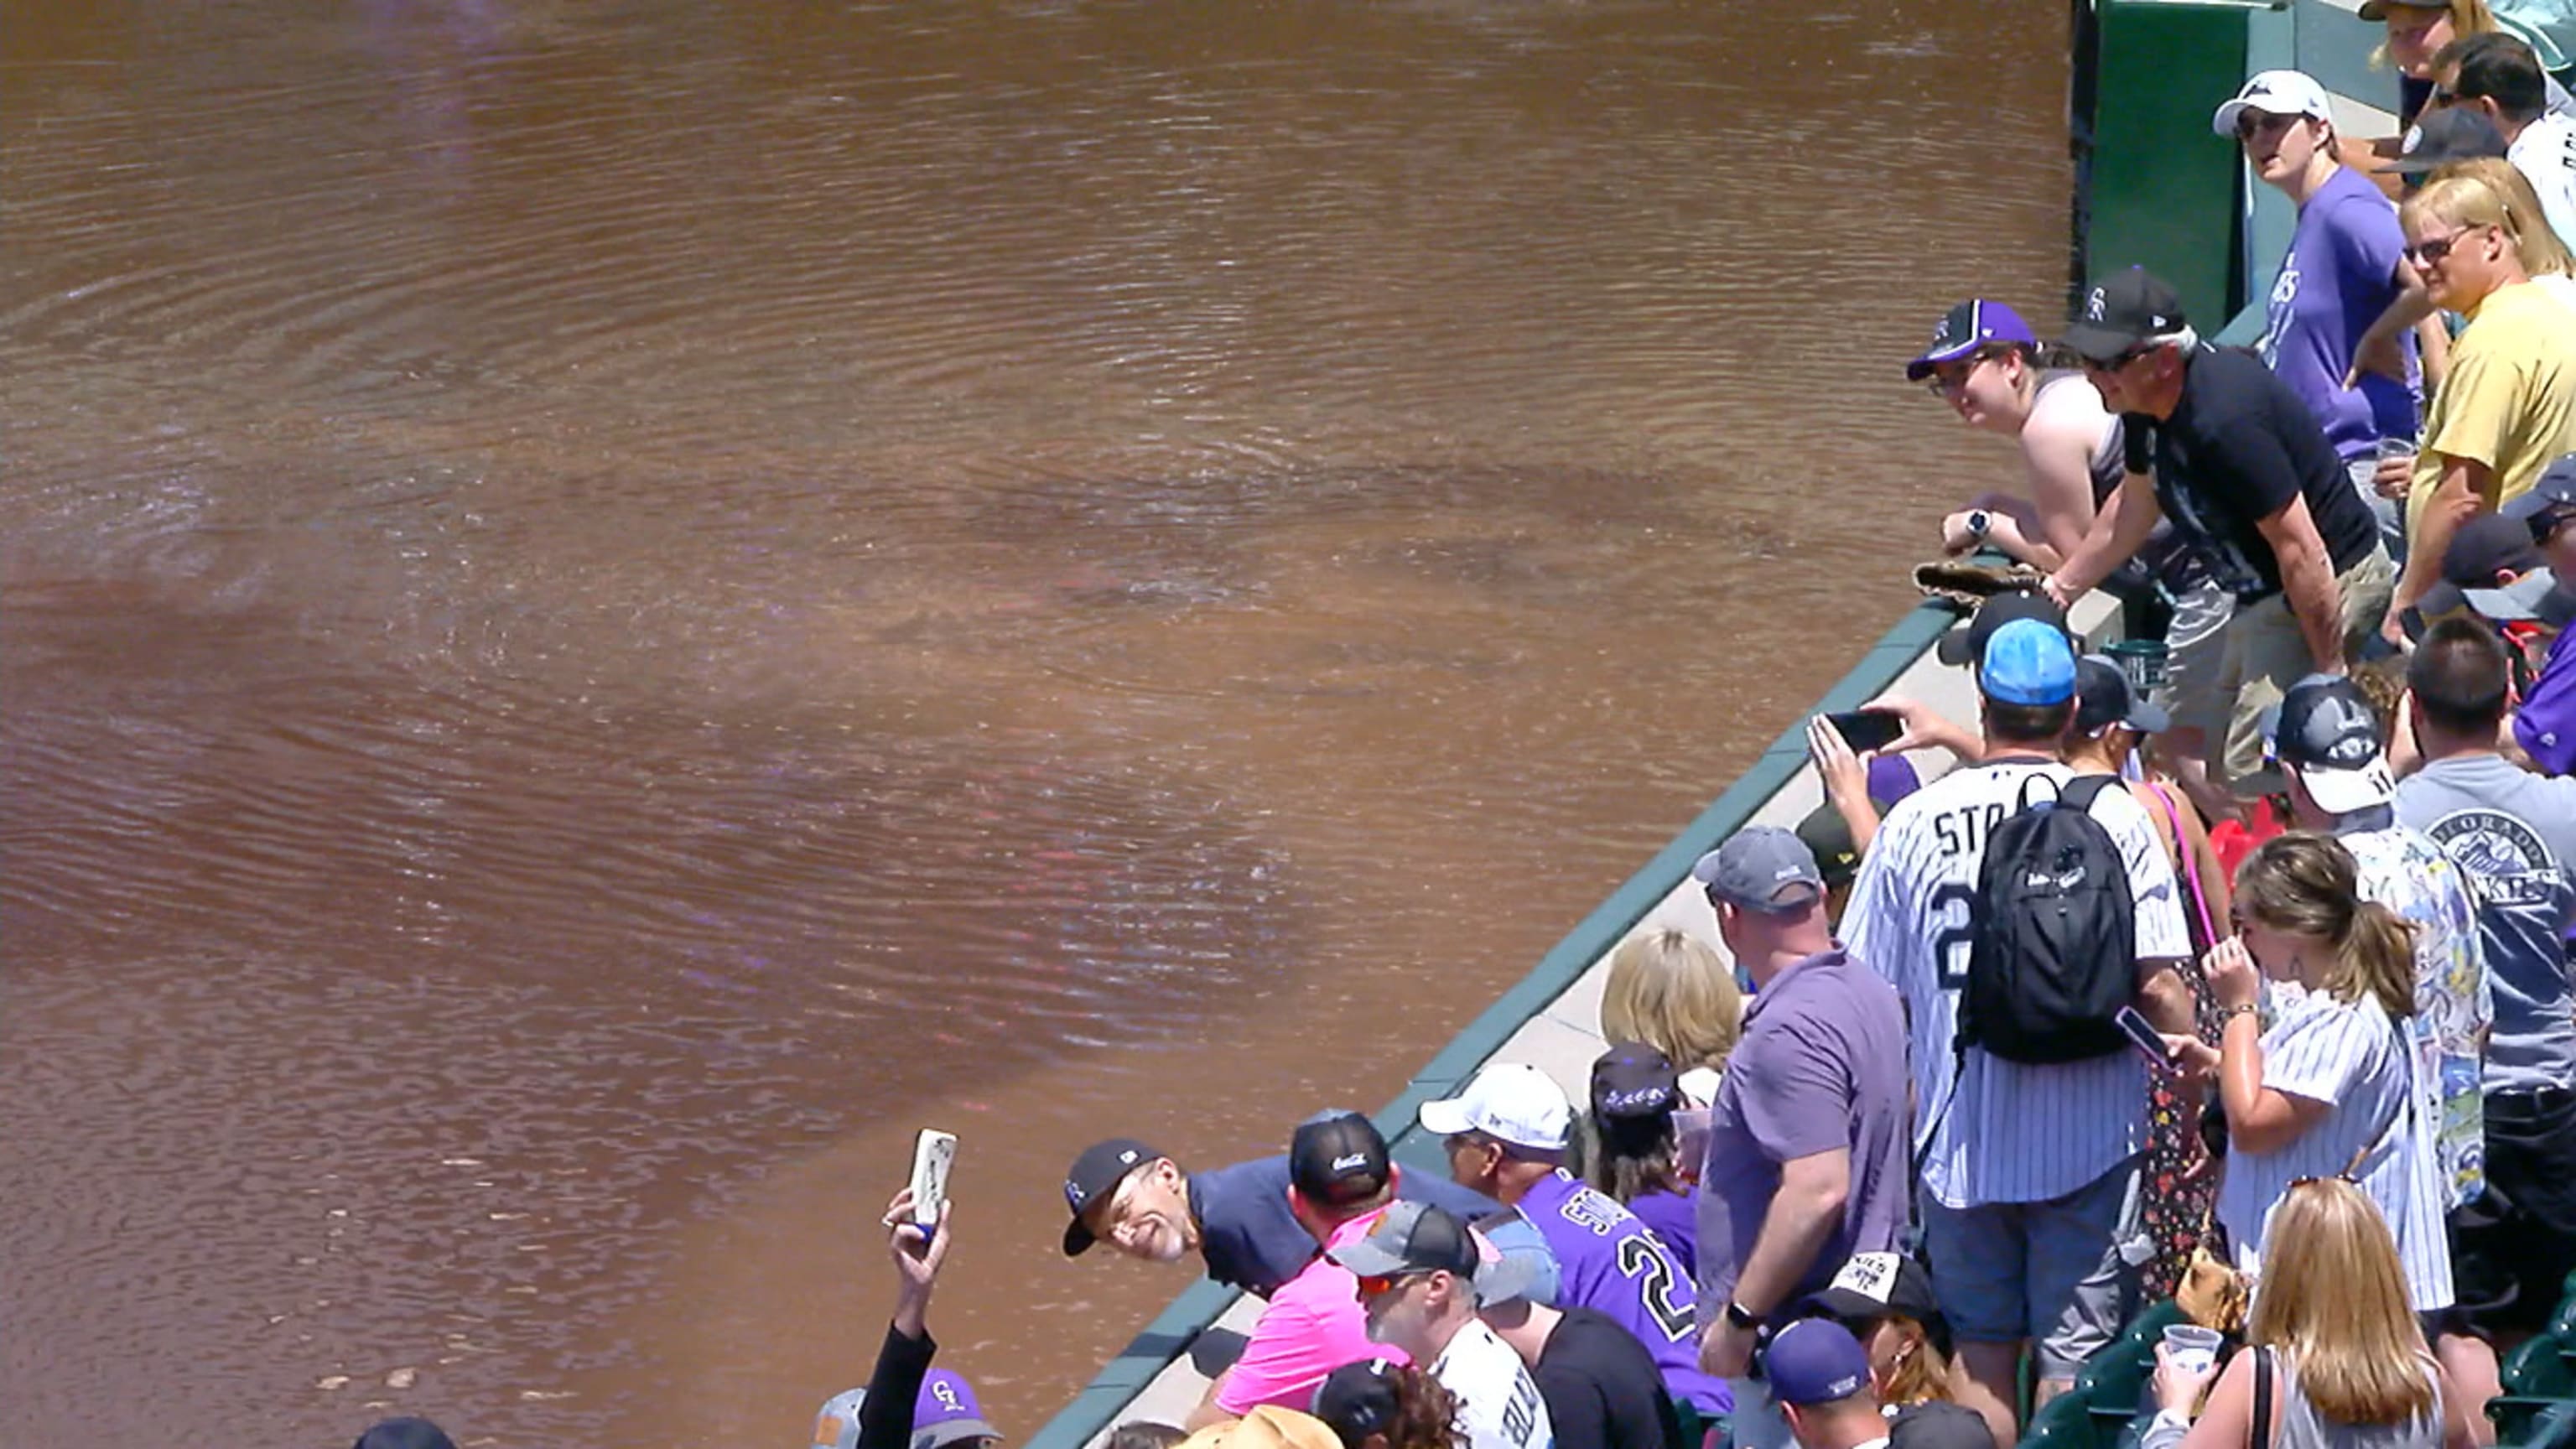 Dodger Stadium Broken Pipe Floods Field with Sewage During Game